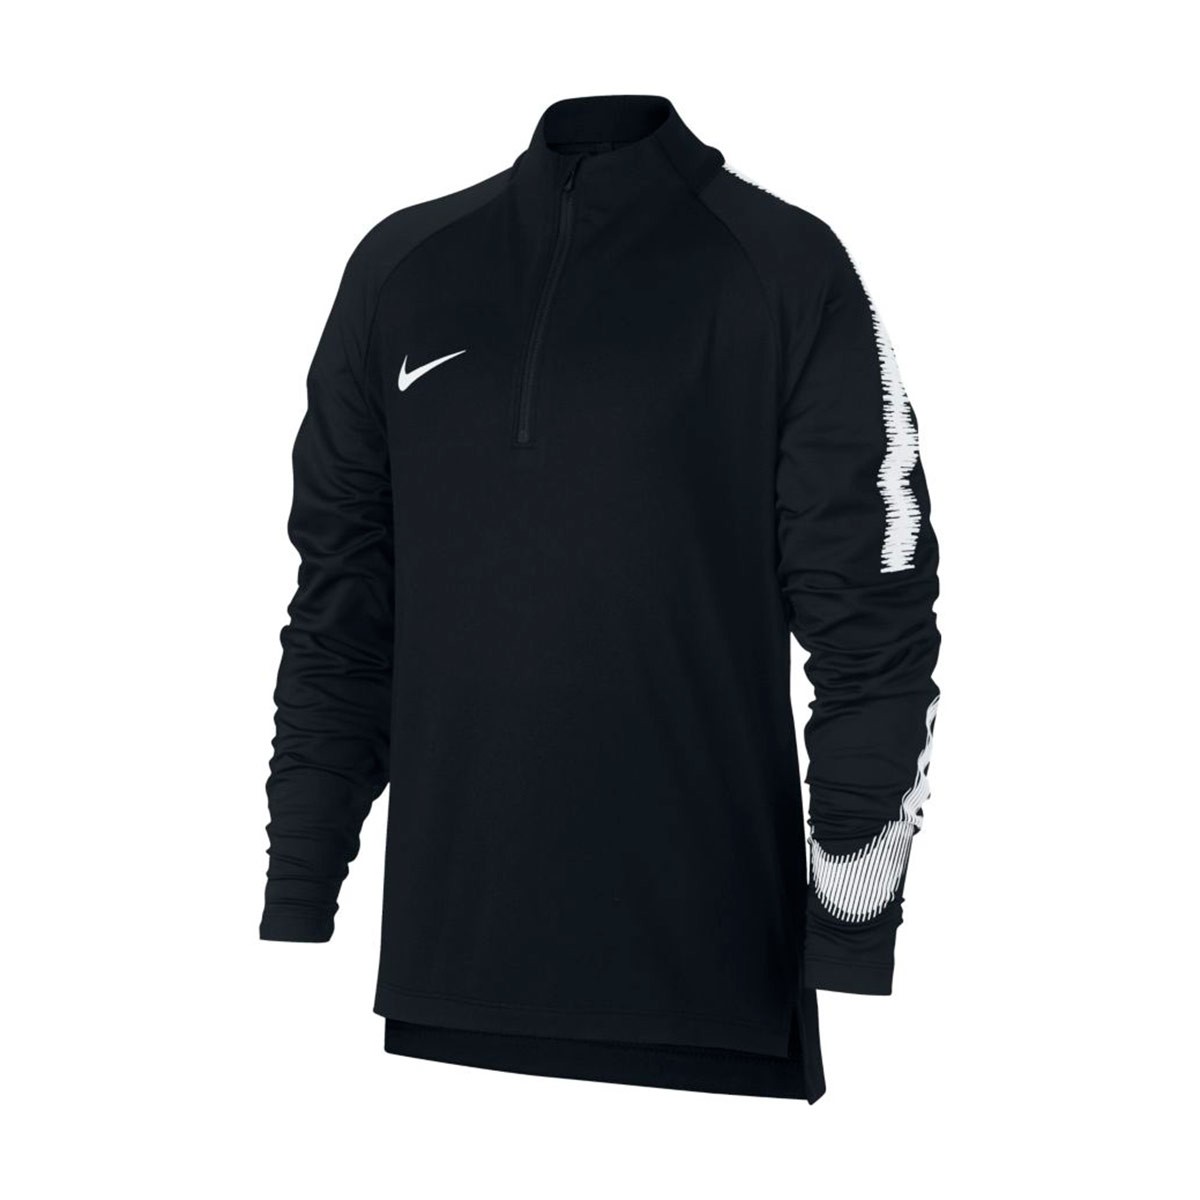 Sudadera Nike Dry Squad Niño Black-White - Tienda de fútbol Fútbol Emotion